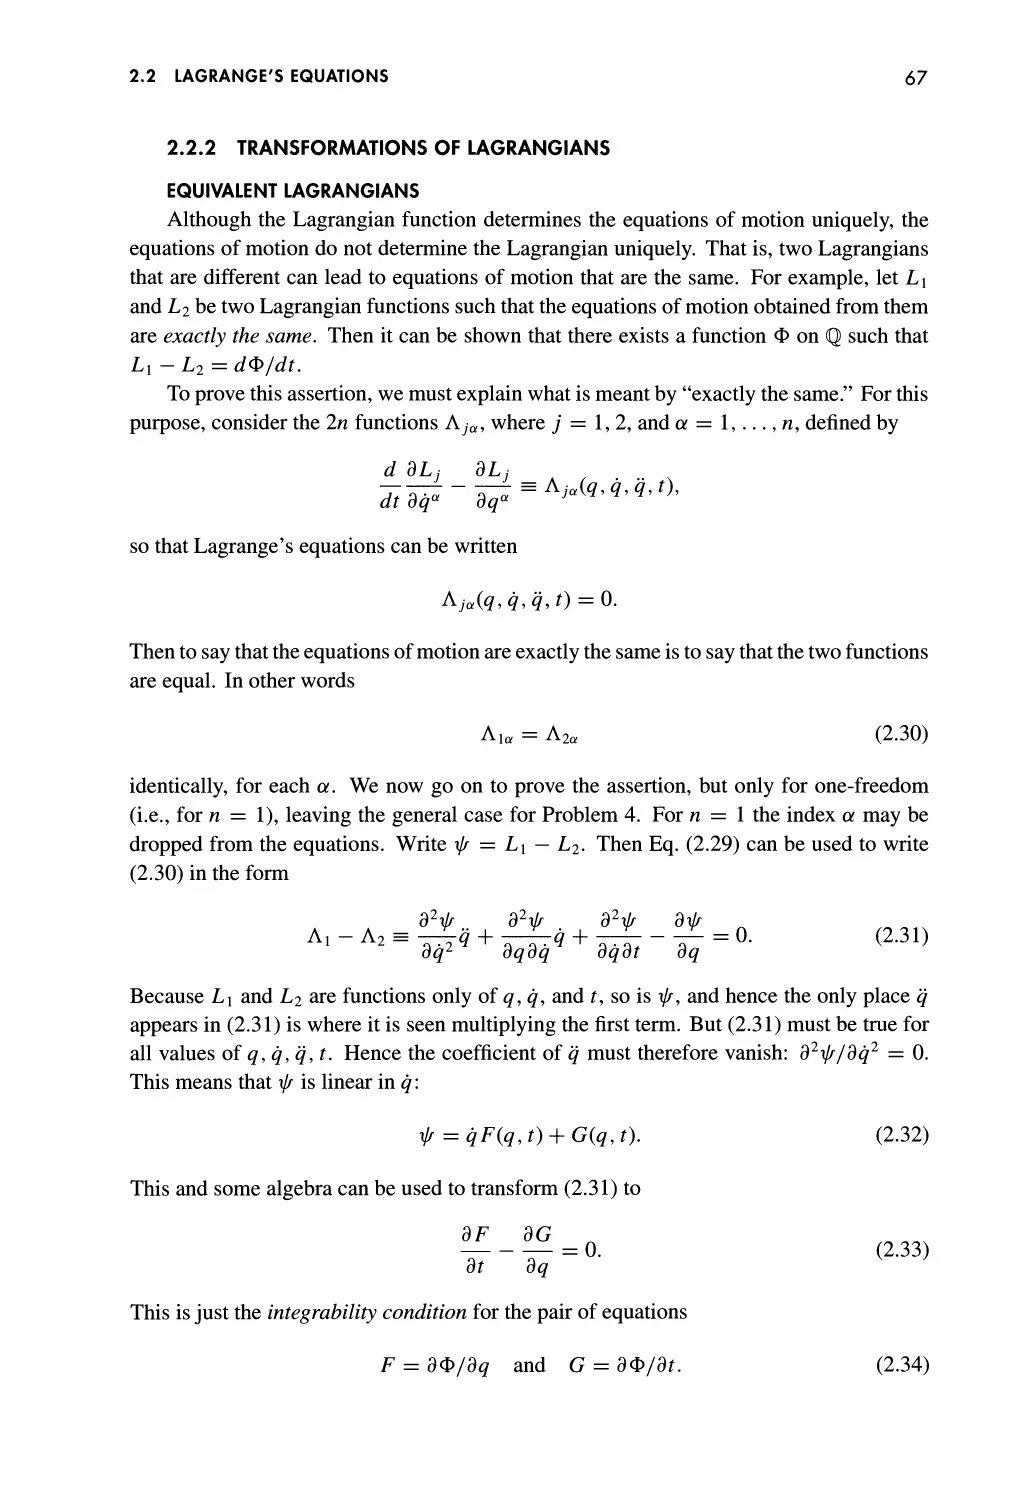 2.2.2 Transformations of Lagrangians